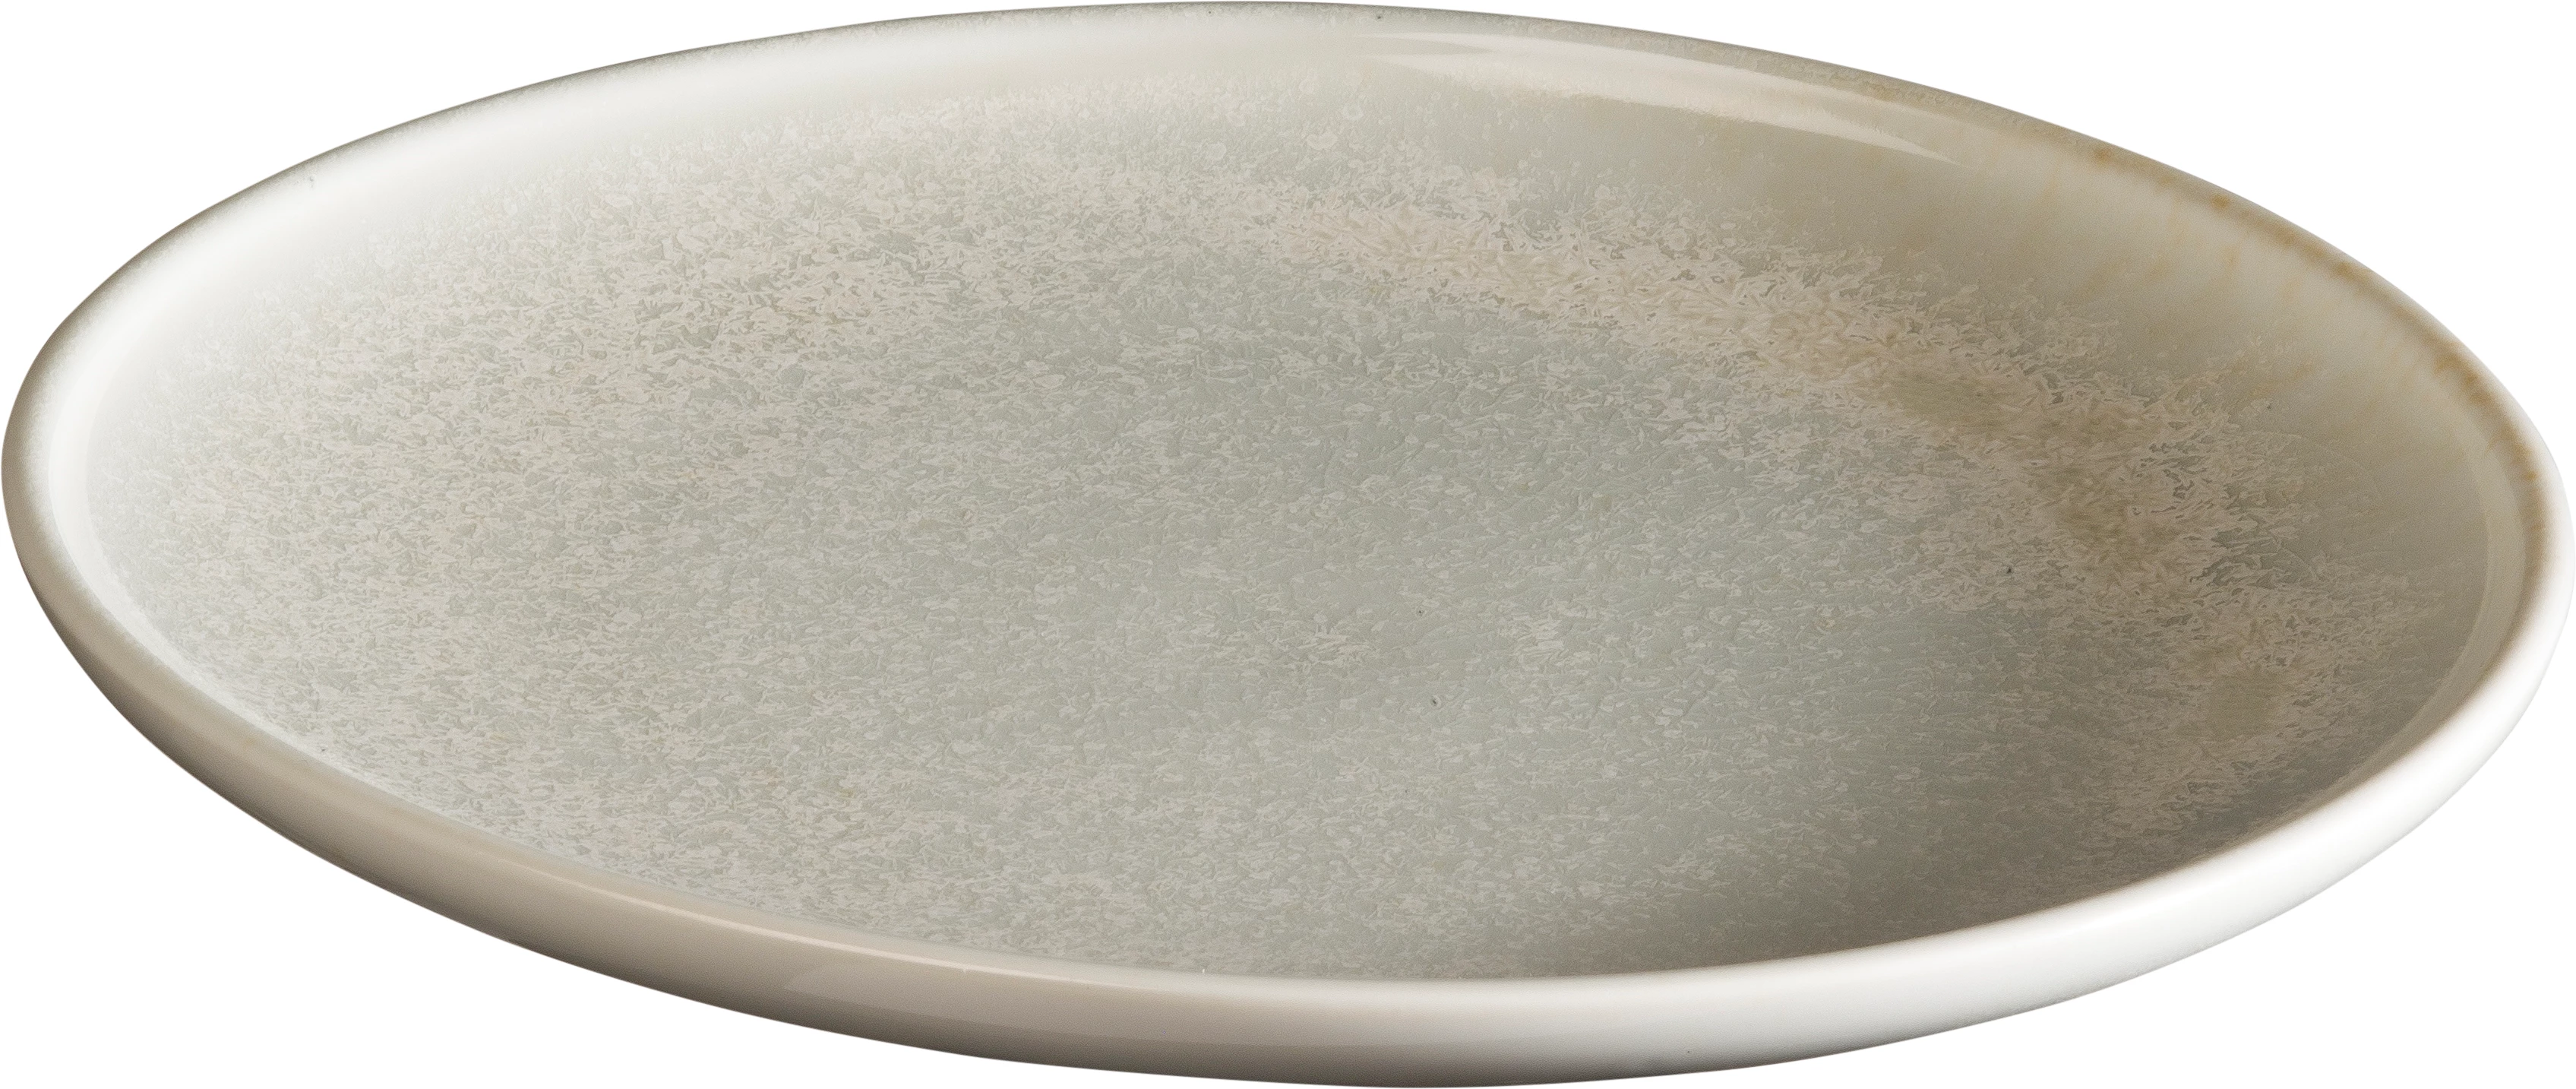 Qmulus tallerken uden fane, grå, ø22,5 cm